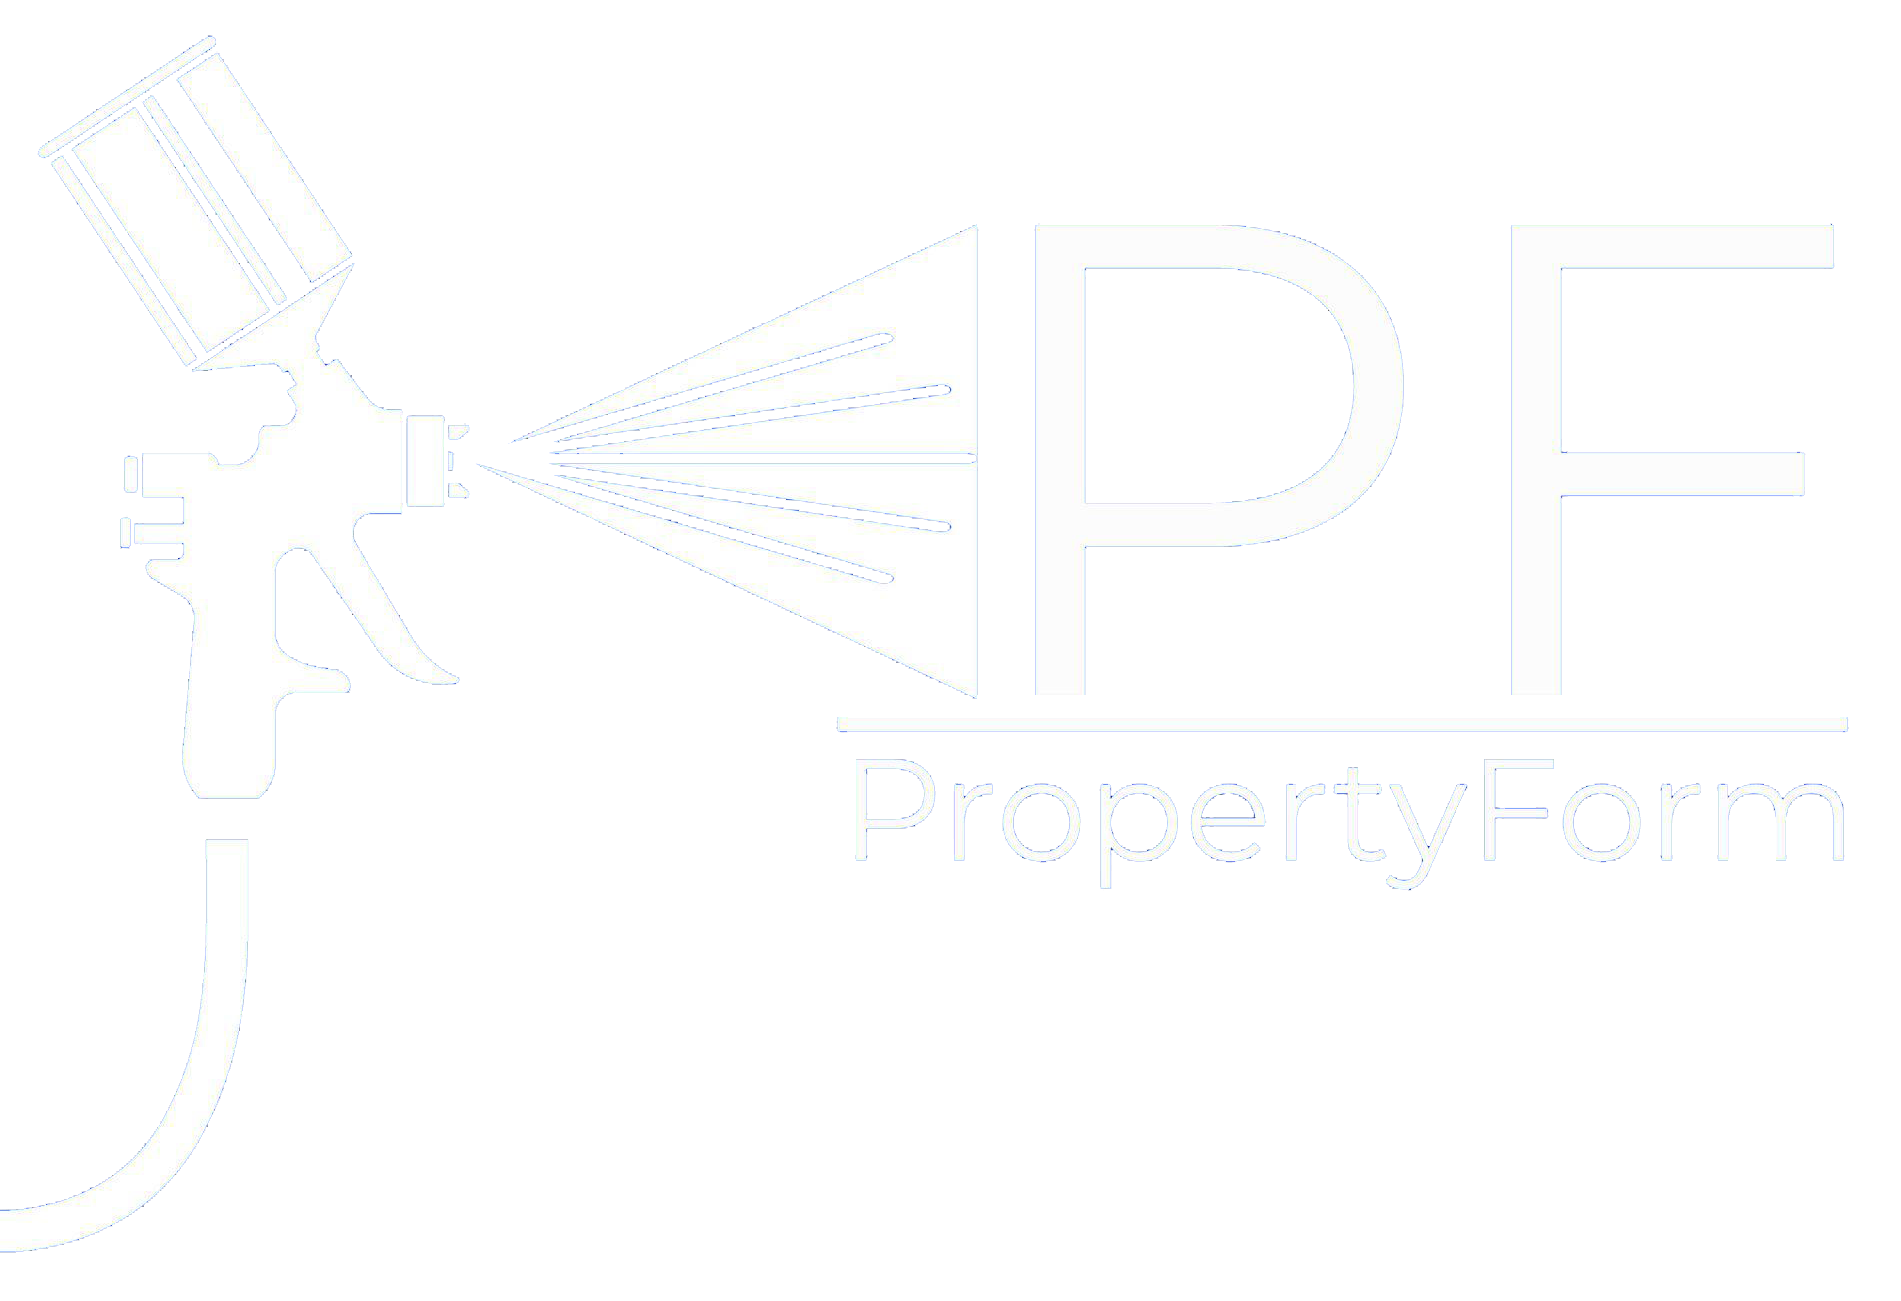 PropertyForm Renovations in Newry Logo